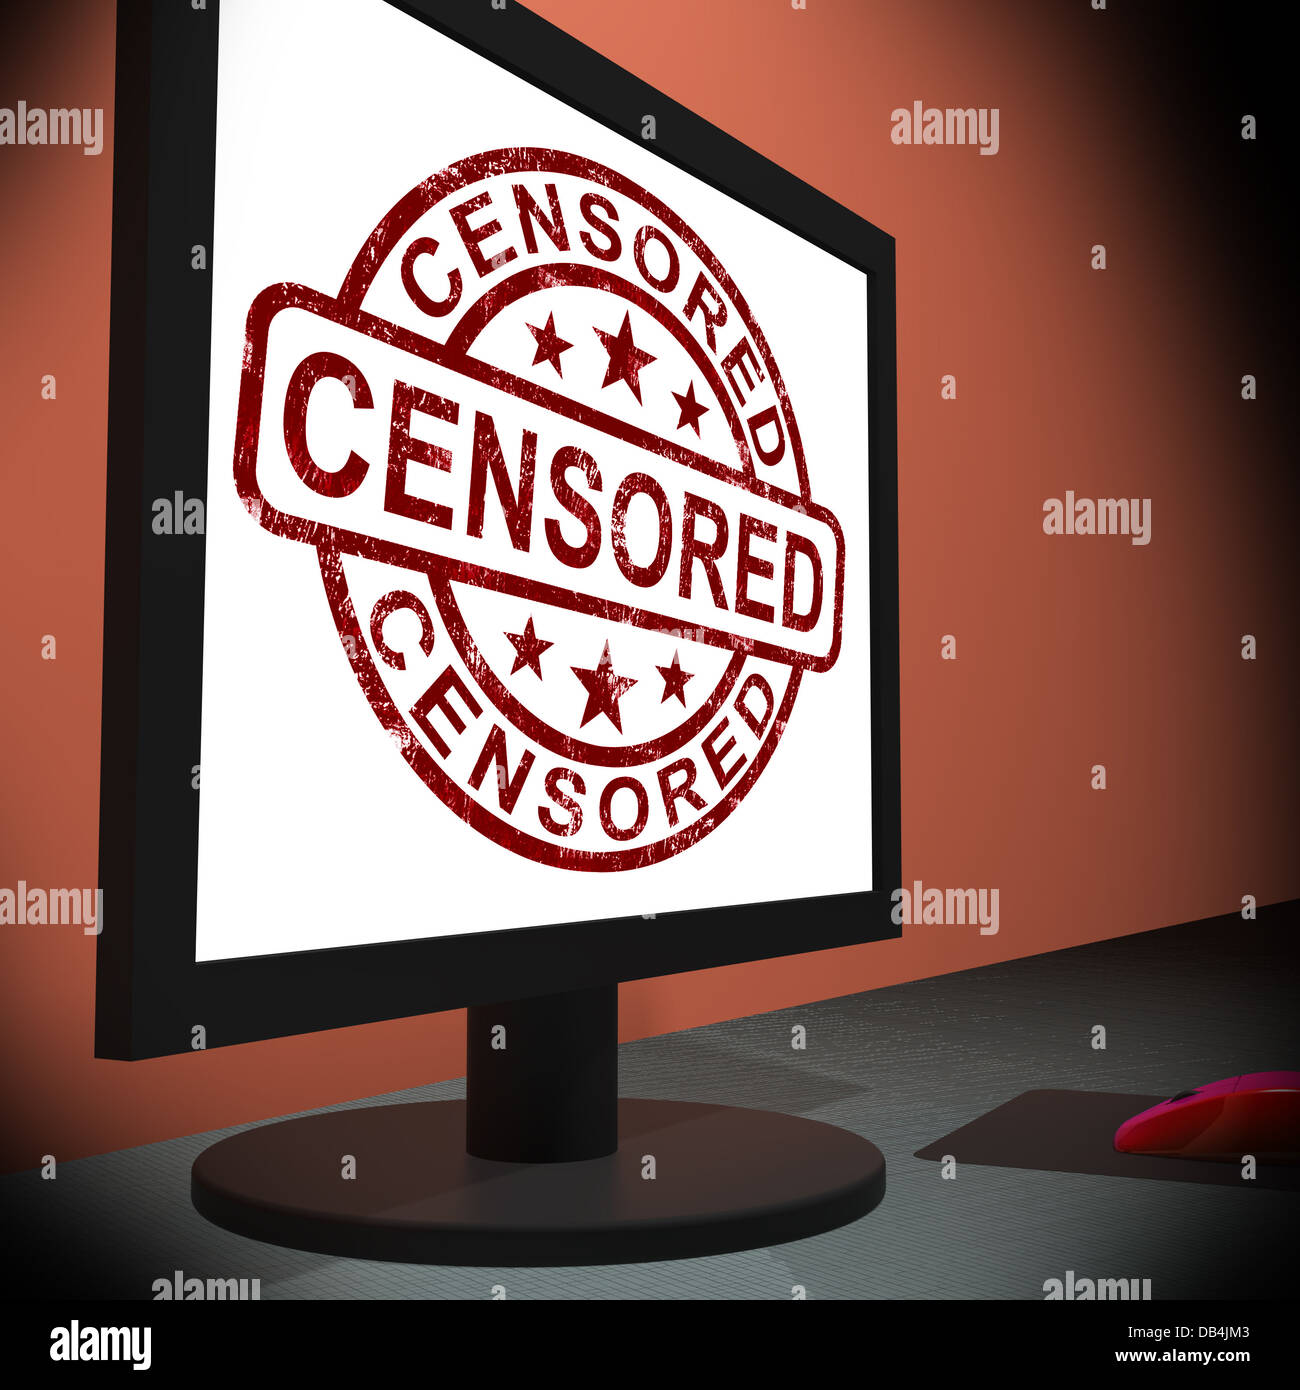 Tv Censorship